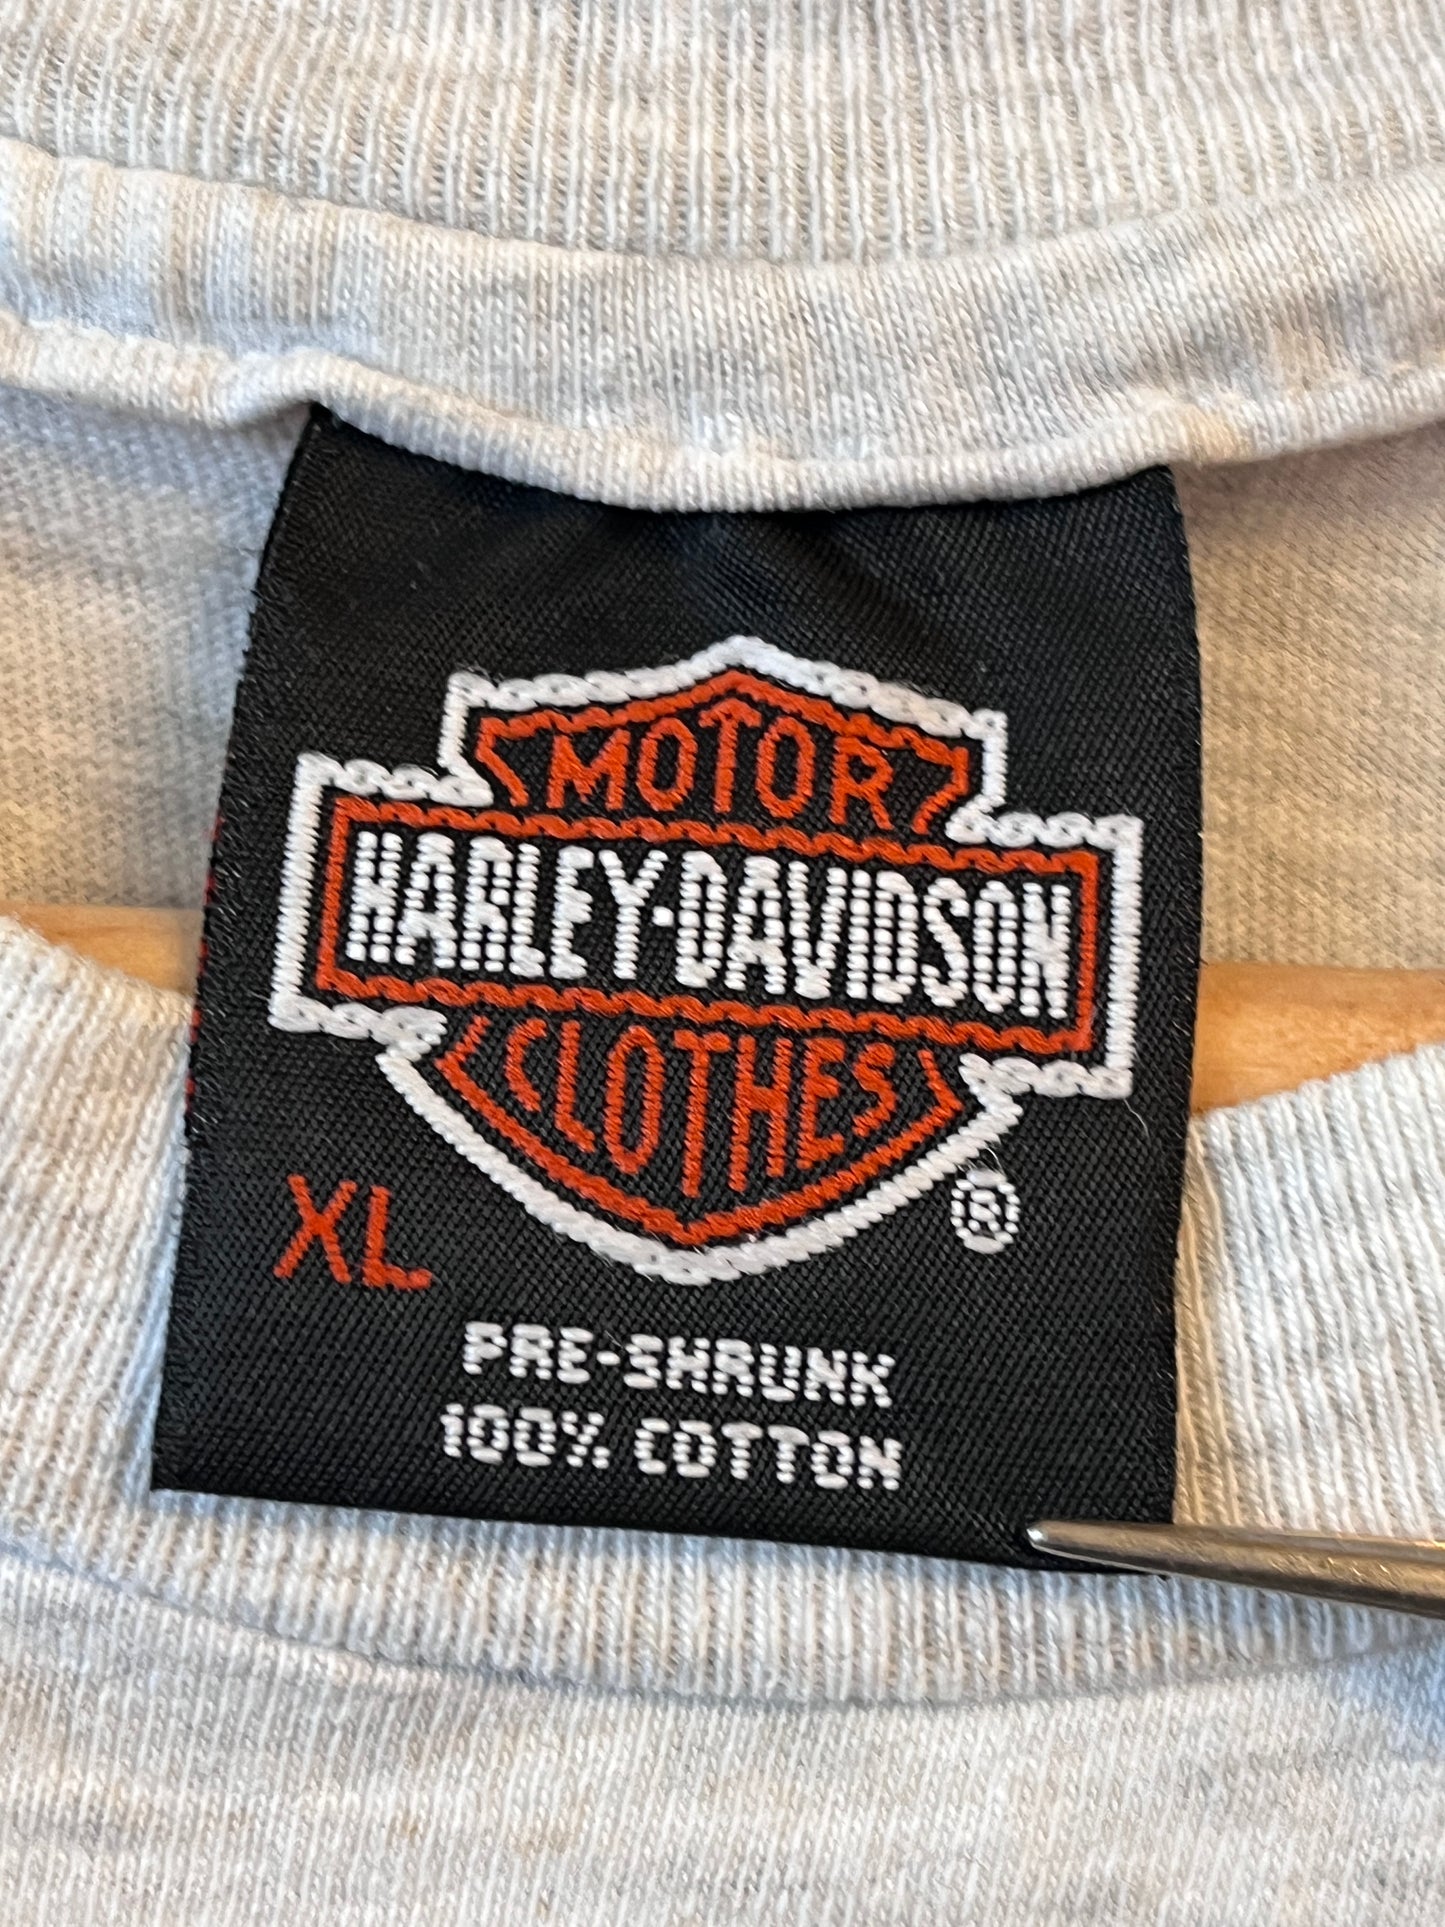 Harley Davidson Eagle graphic Los Angeles, California '91